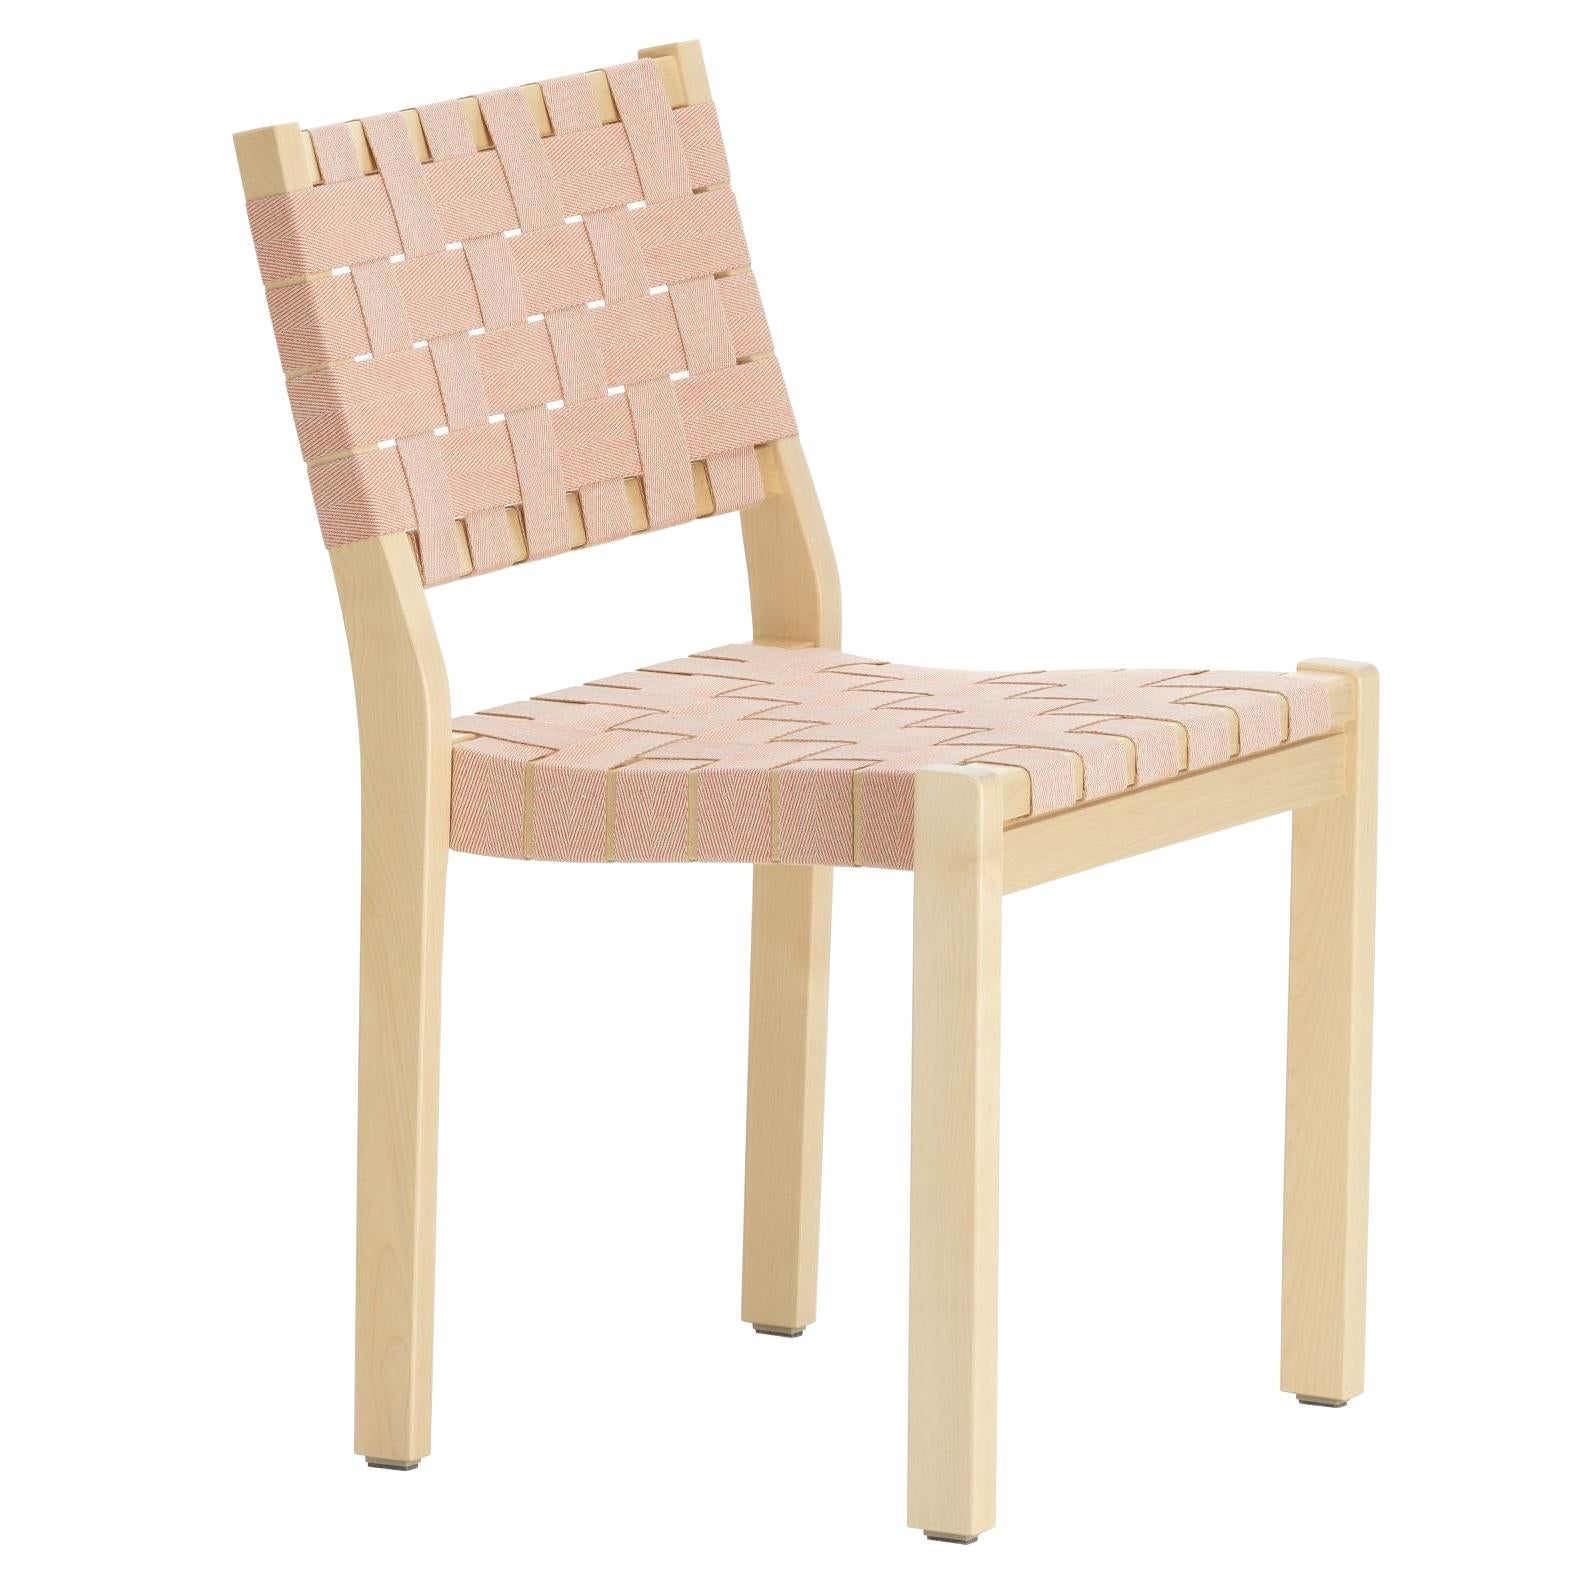 Chair 611 in Birch and Natural/Red Linen by Alvar Aalto & Artek